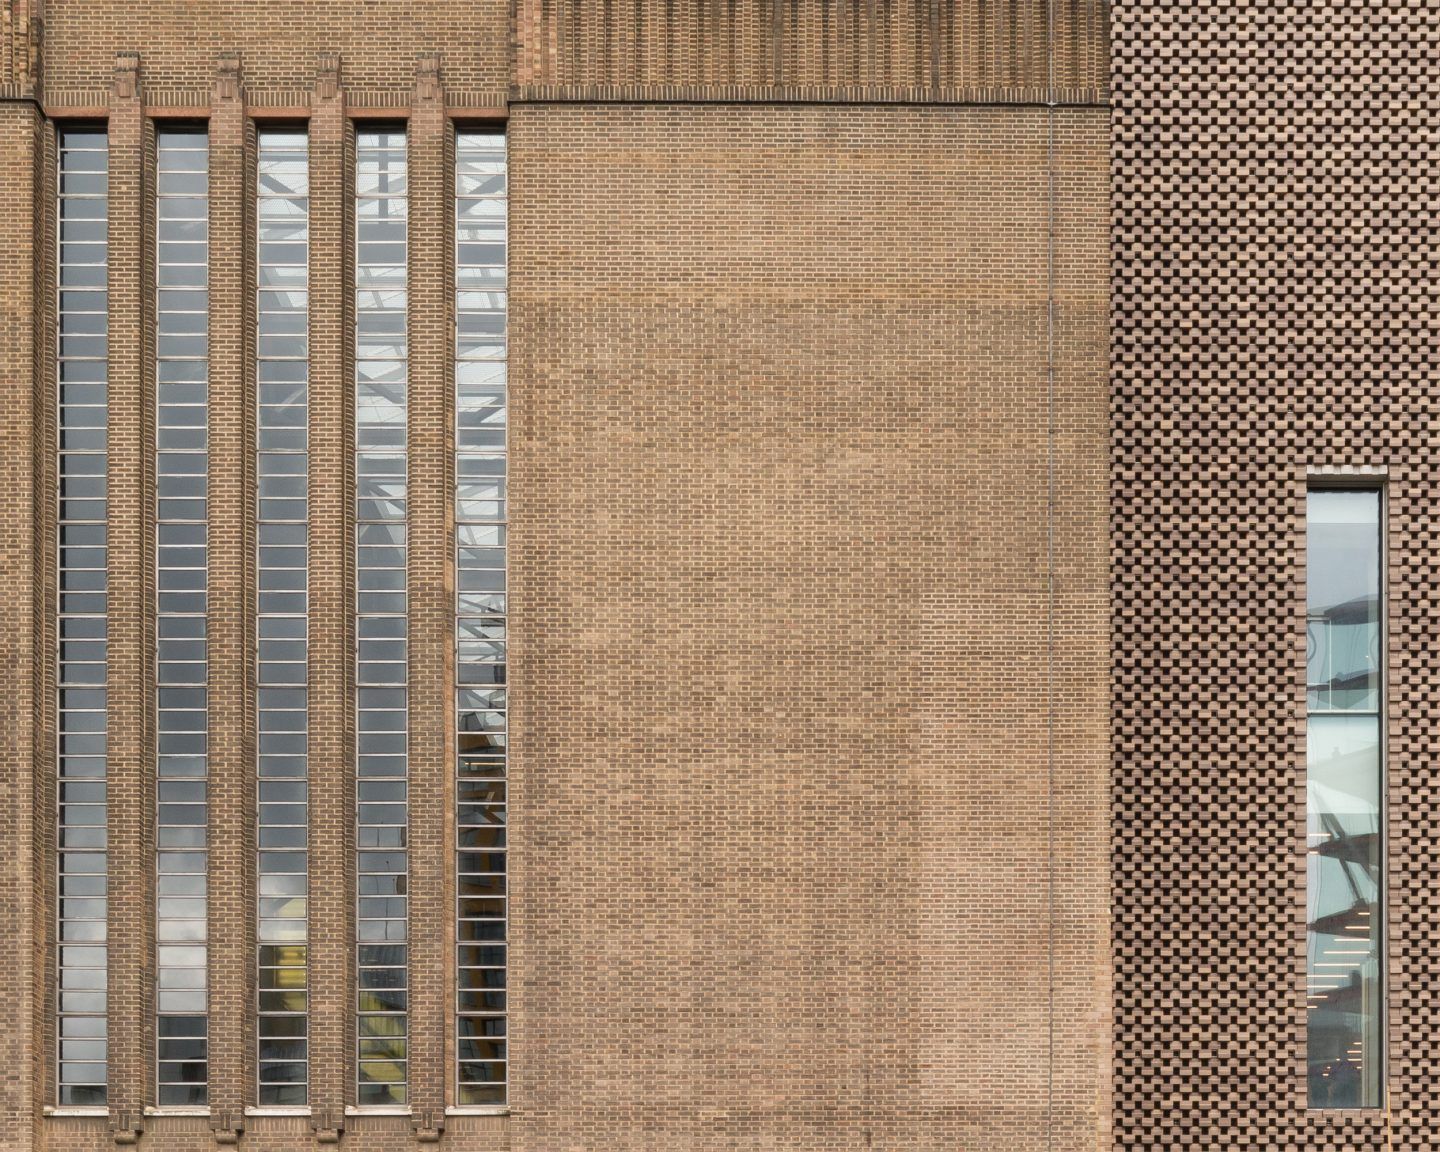 Tate Modern Switch House by Herzog & de Meuron. Copyright Jim Stephenson 2016